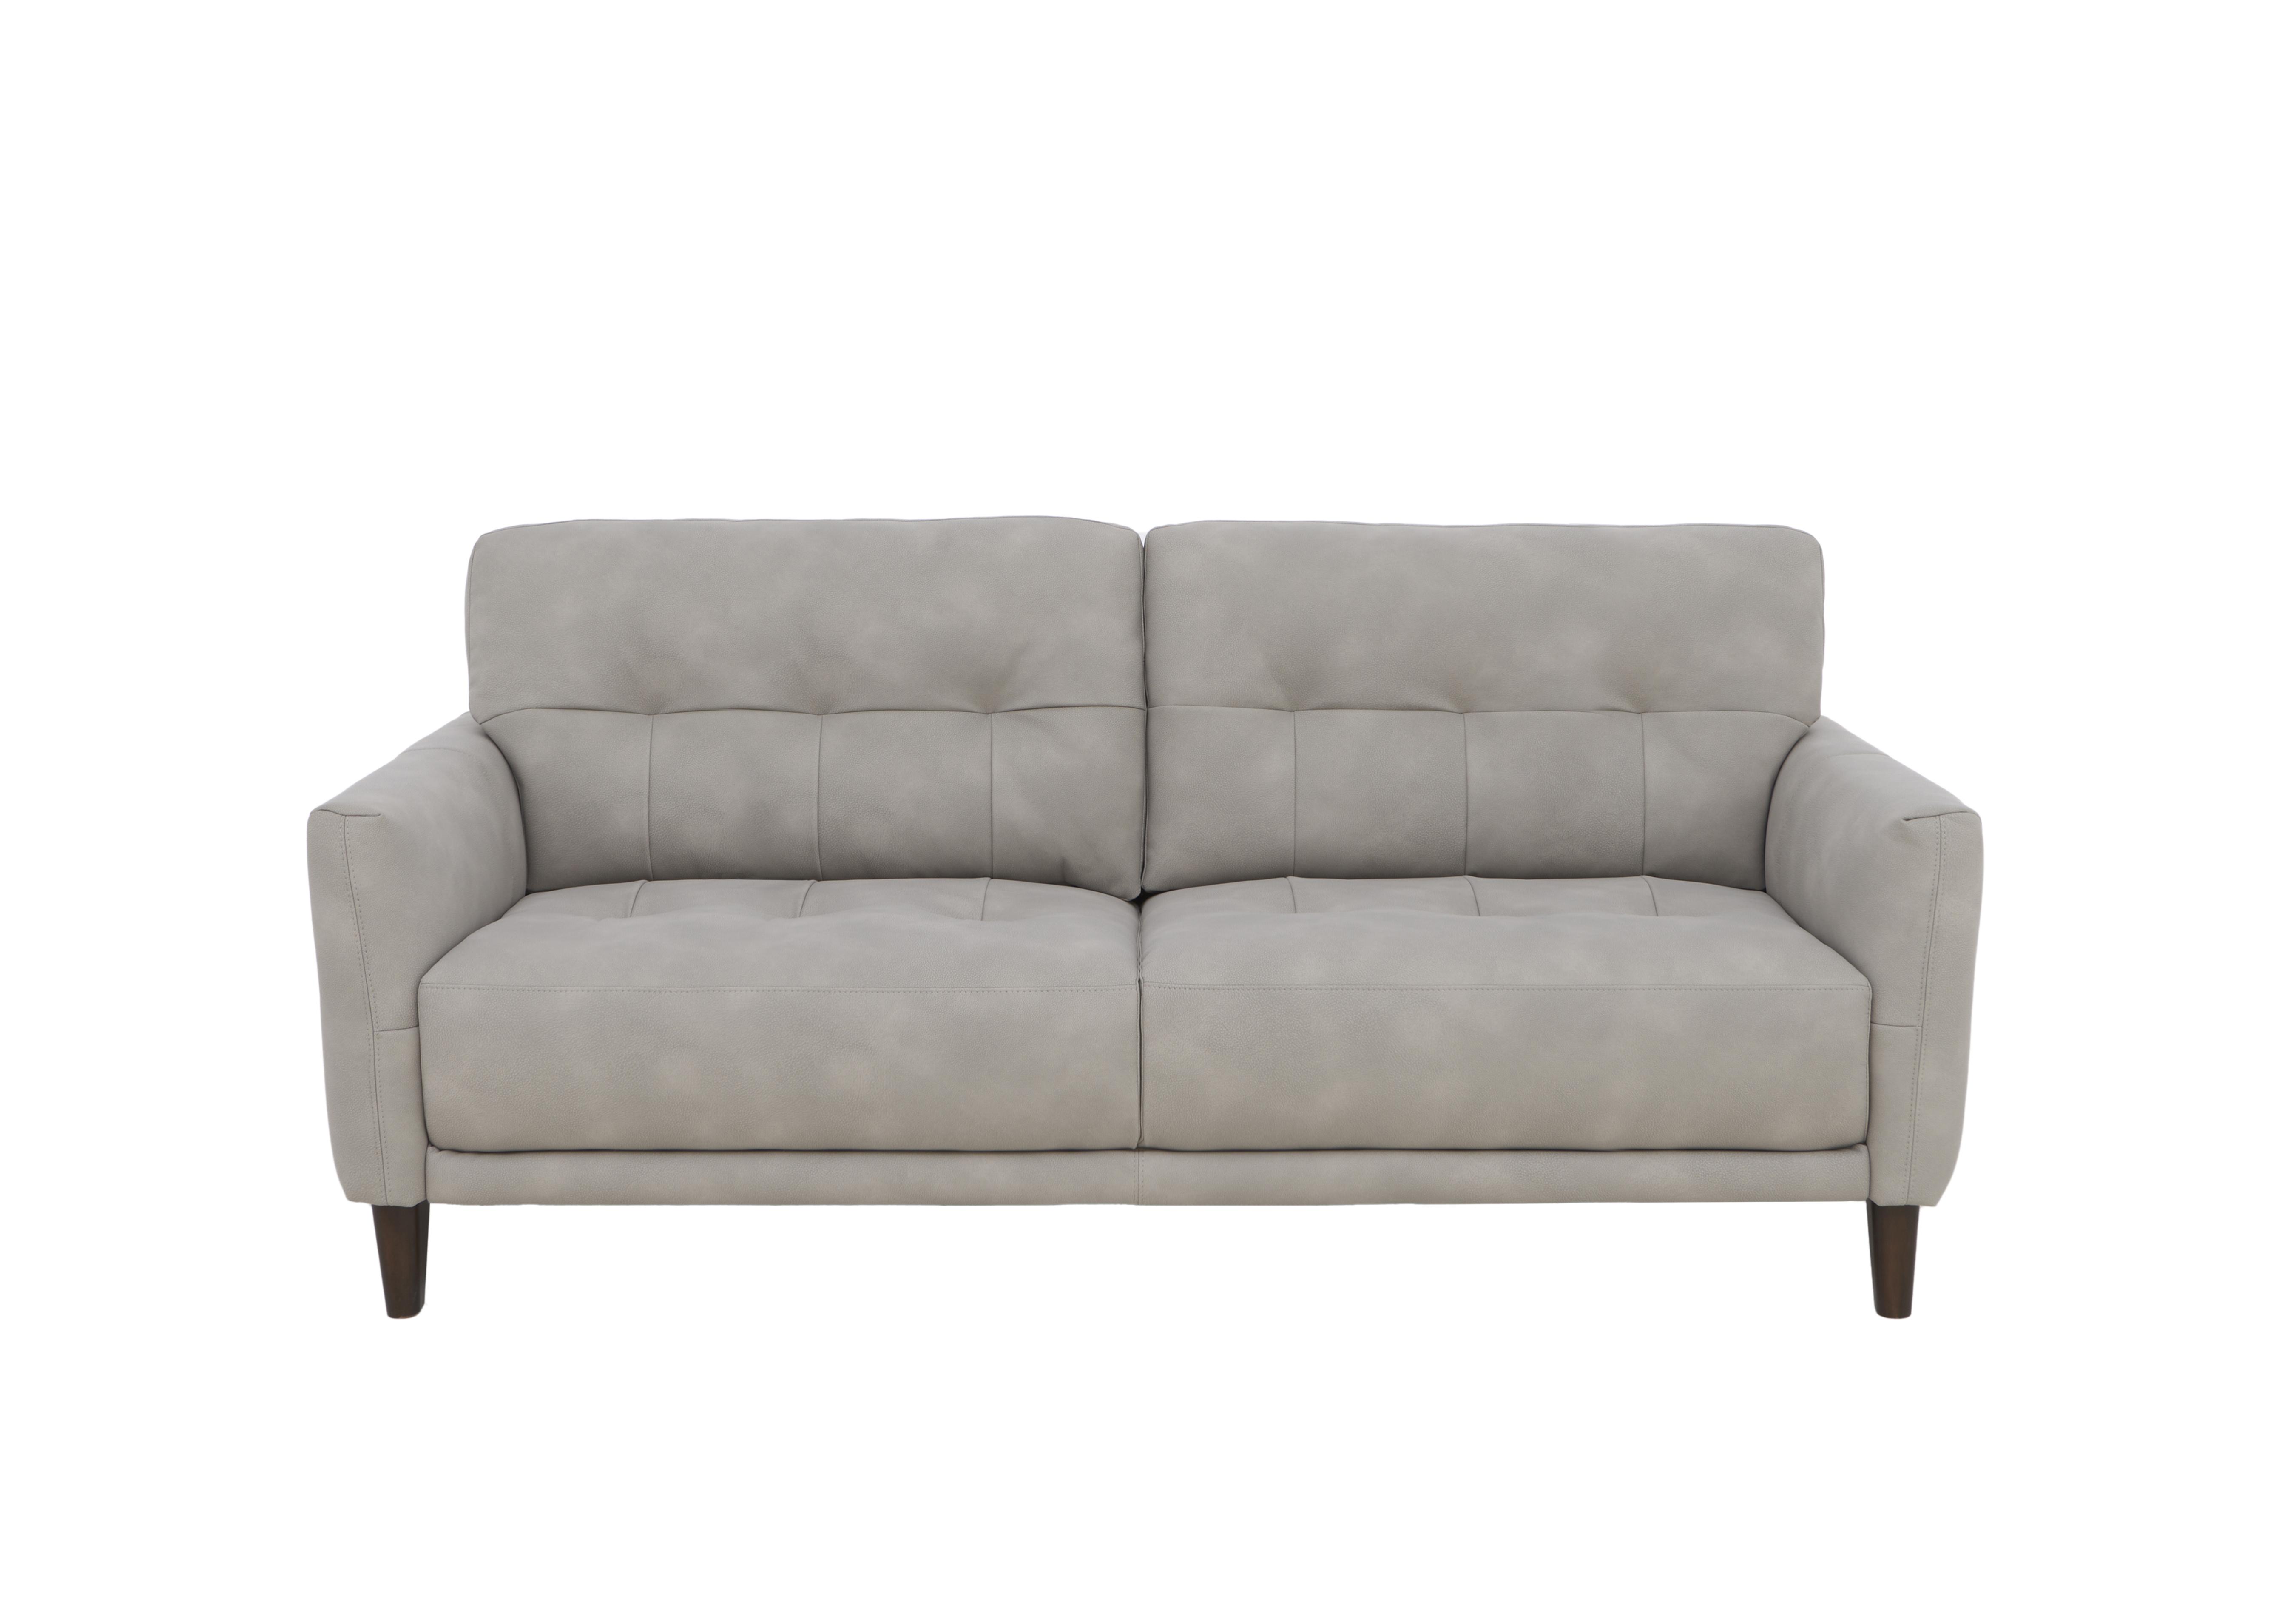 Uno Fabric 3 Seater Sofa in Bfa-Bey-R18 Beige on Furniture Village